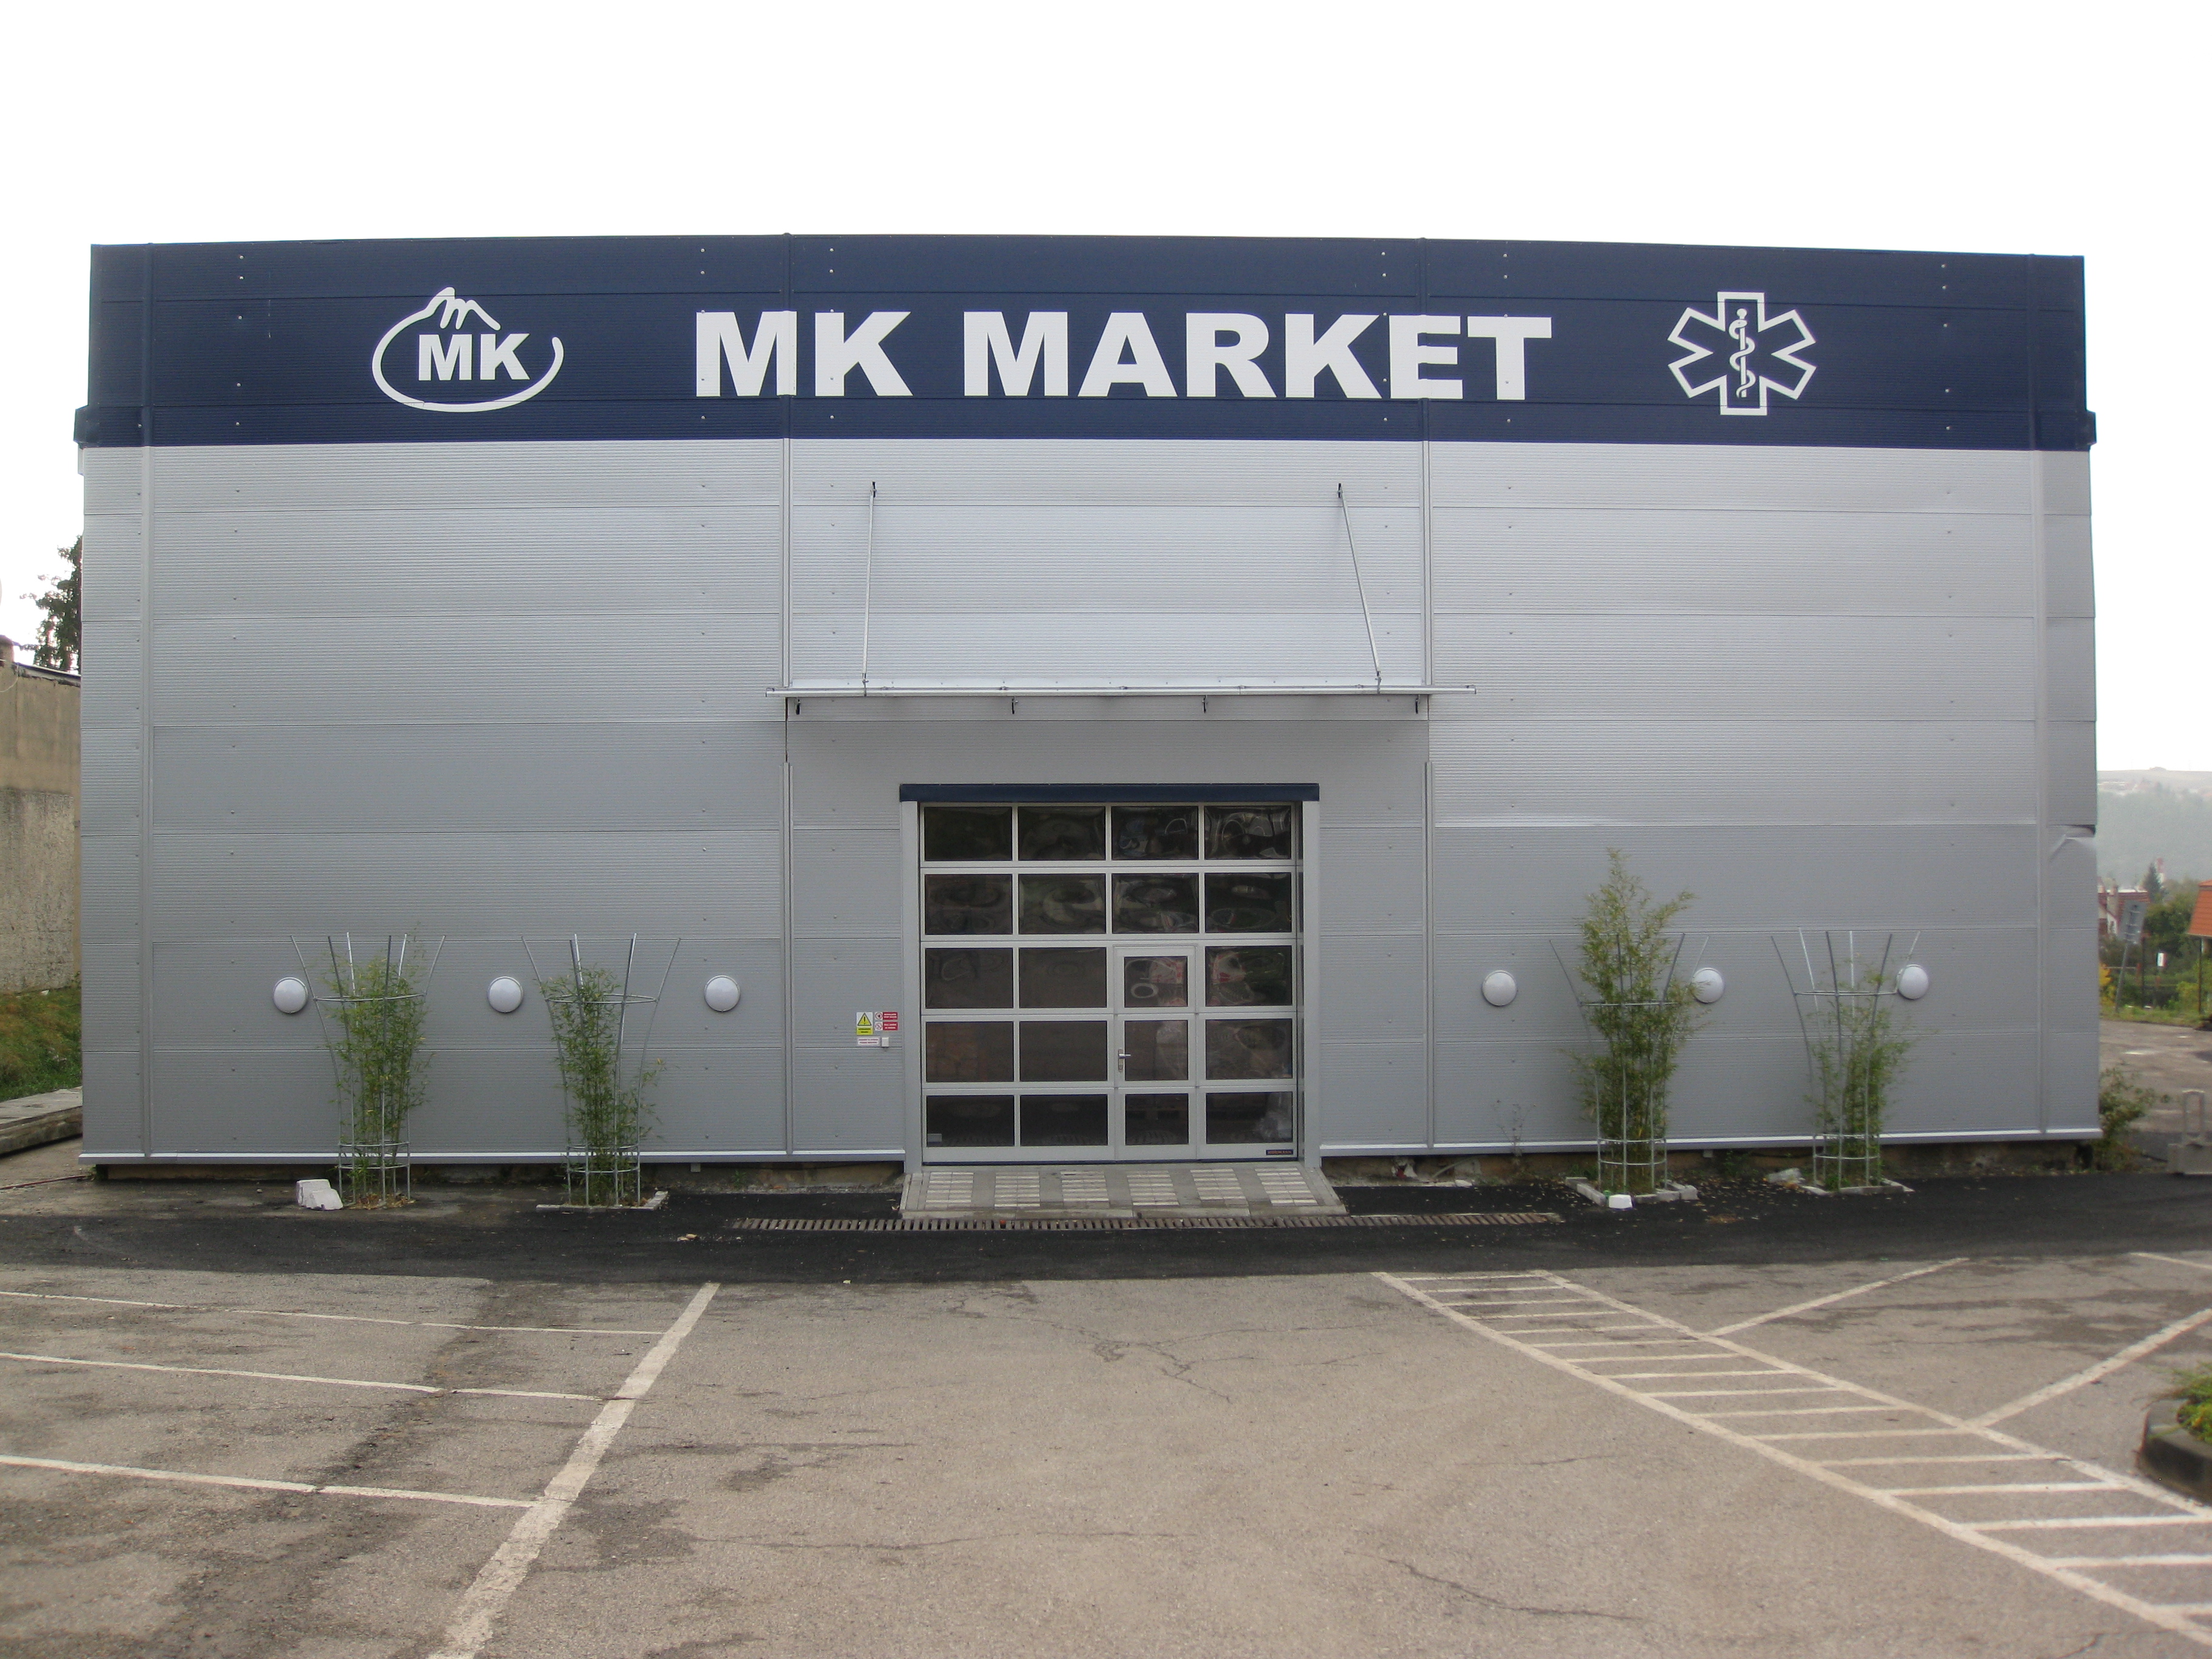 mk-market-praha-nater-plech-panelu-7102008-004-1503105627.jpg